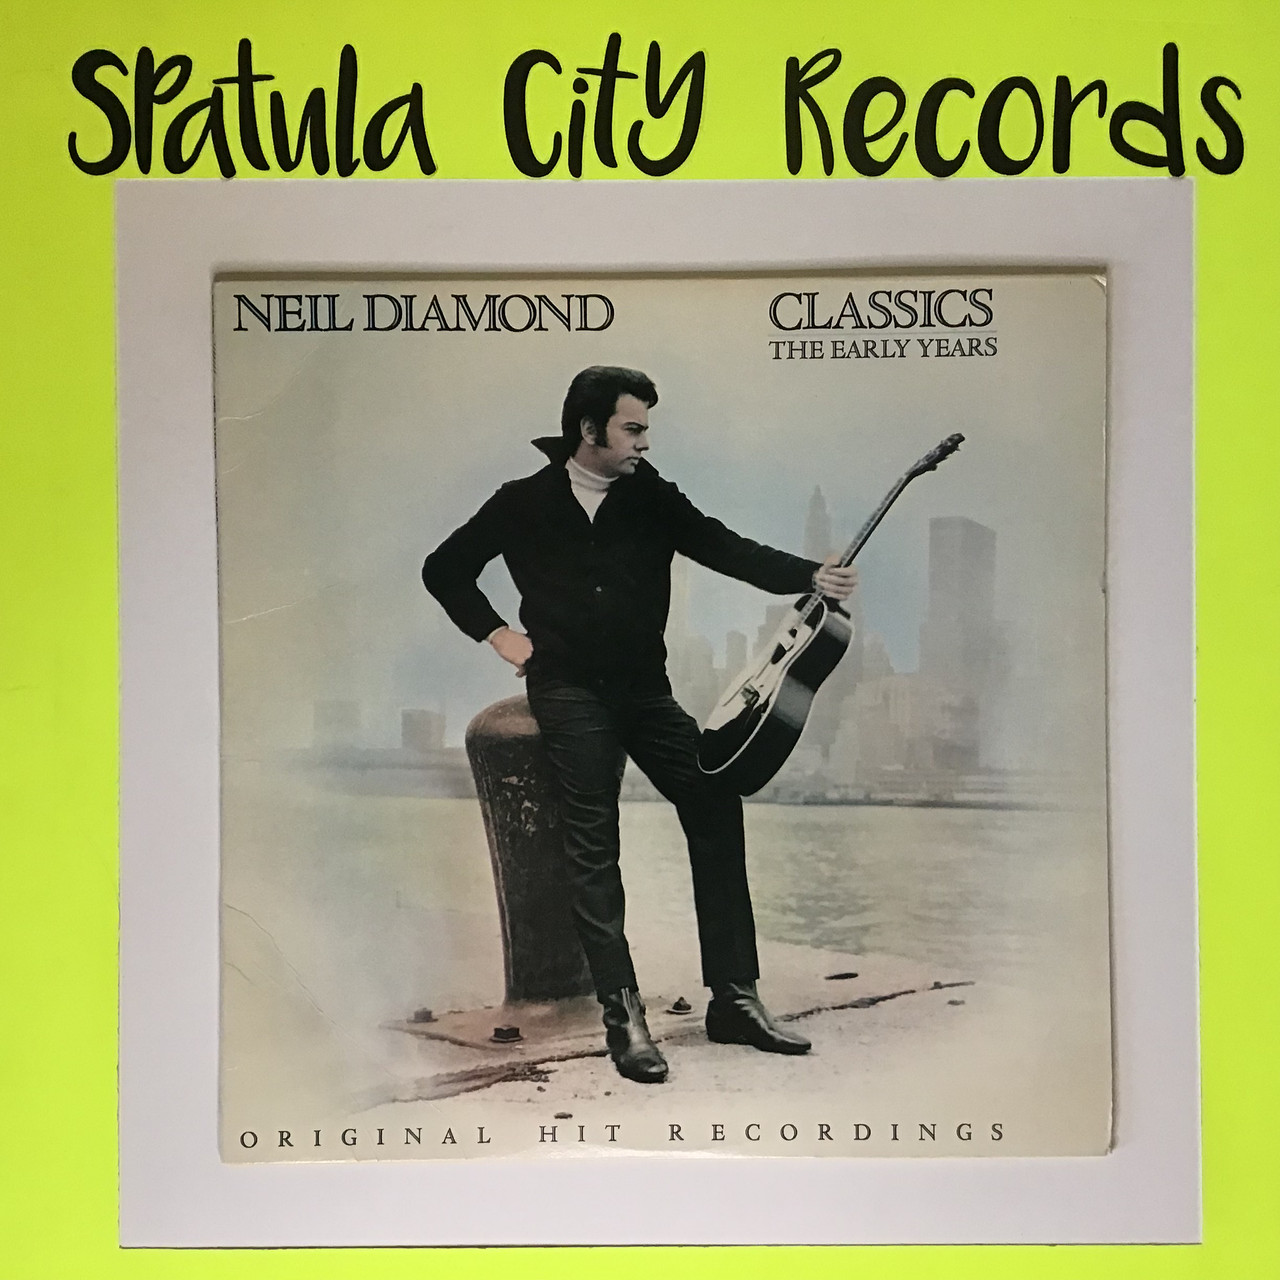 Neil Diamond - Classics The Early Years - vinyl record album LP